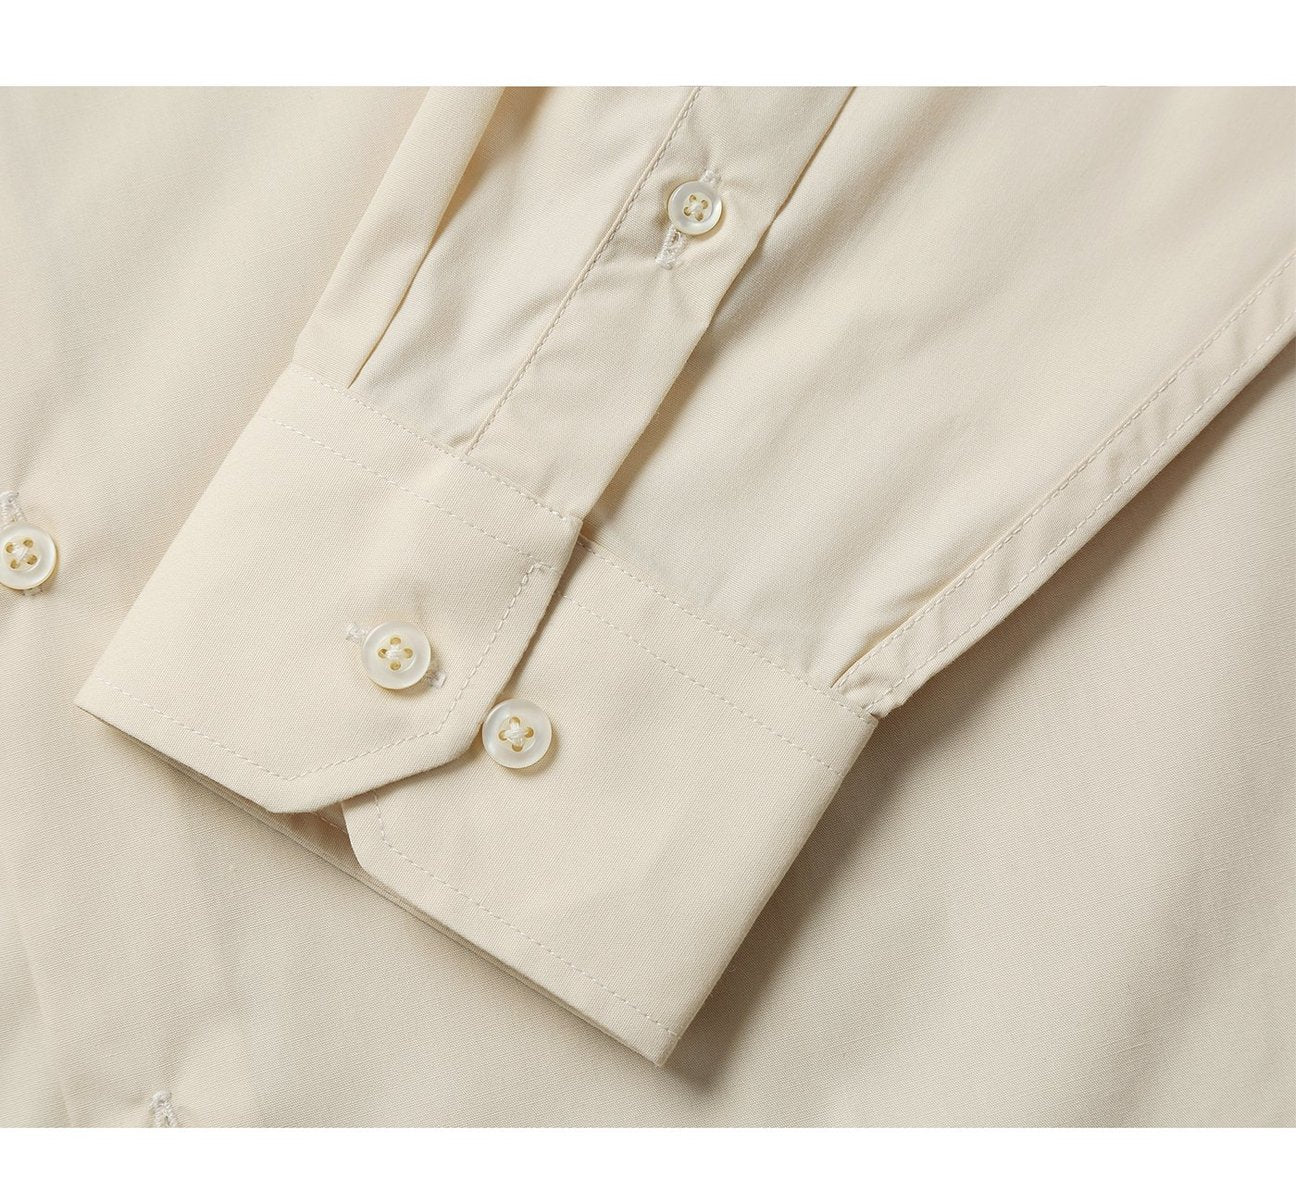 RENOIR Taupe Classic/Regular Fit Long Sleeve Spread Collar Dress Shirt TC23